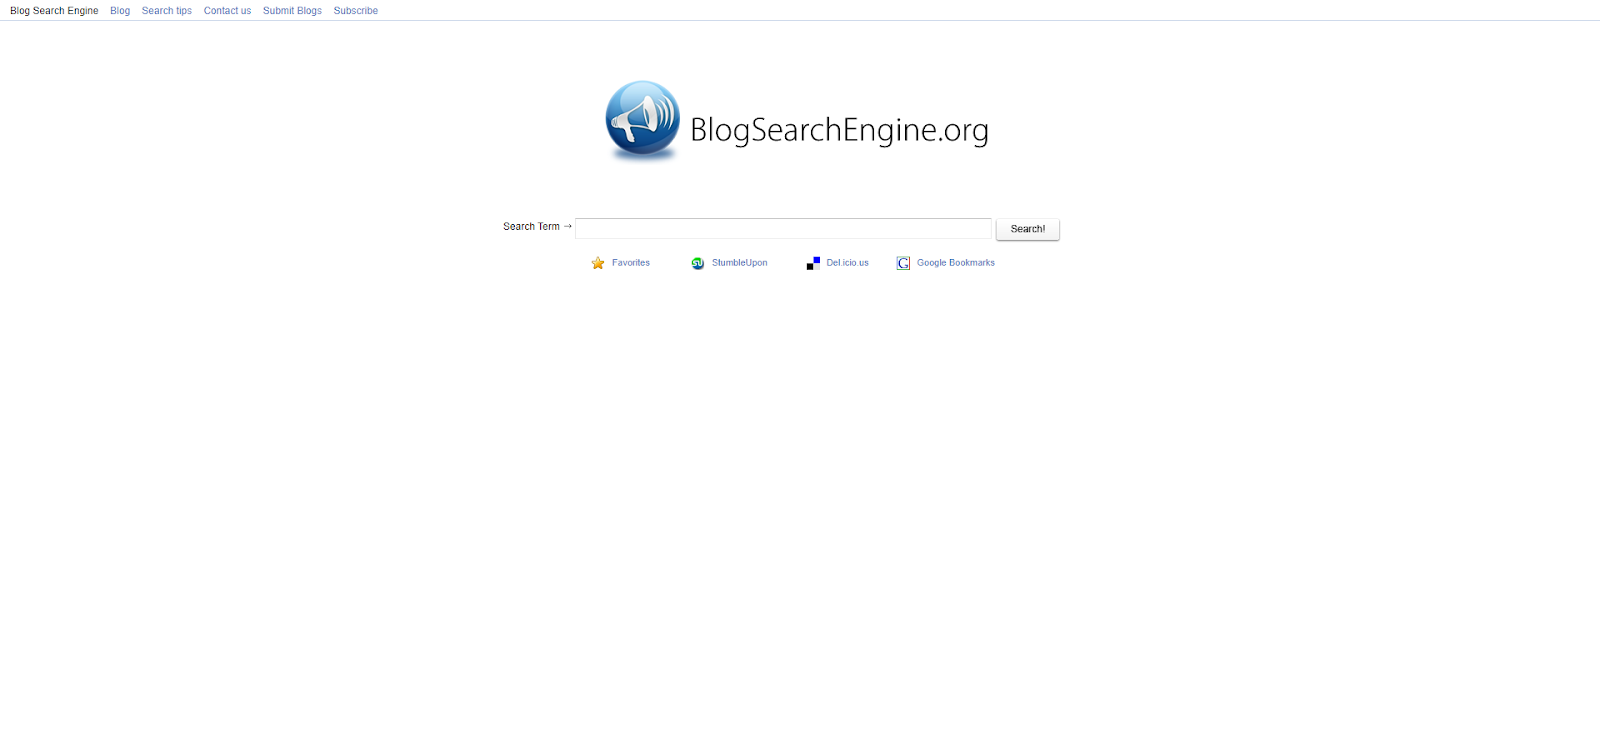 Blog Search Engine